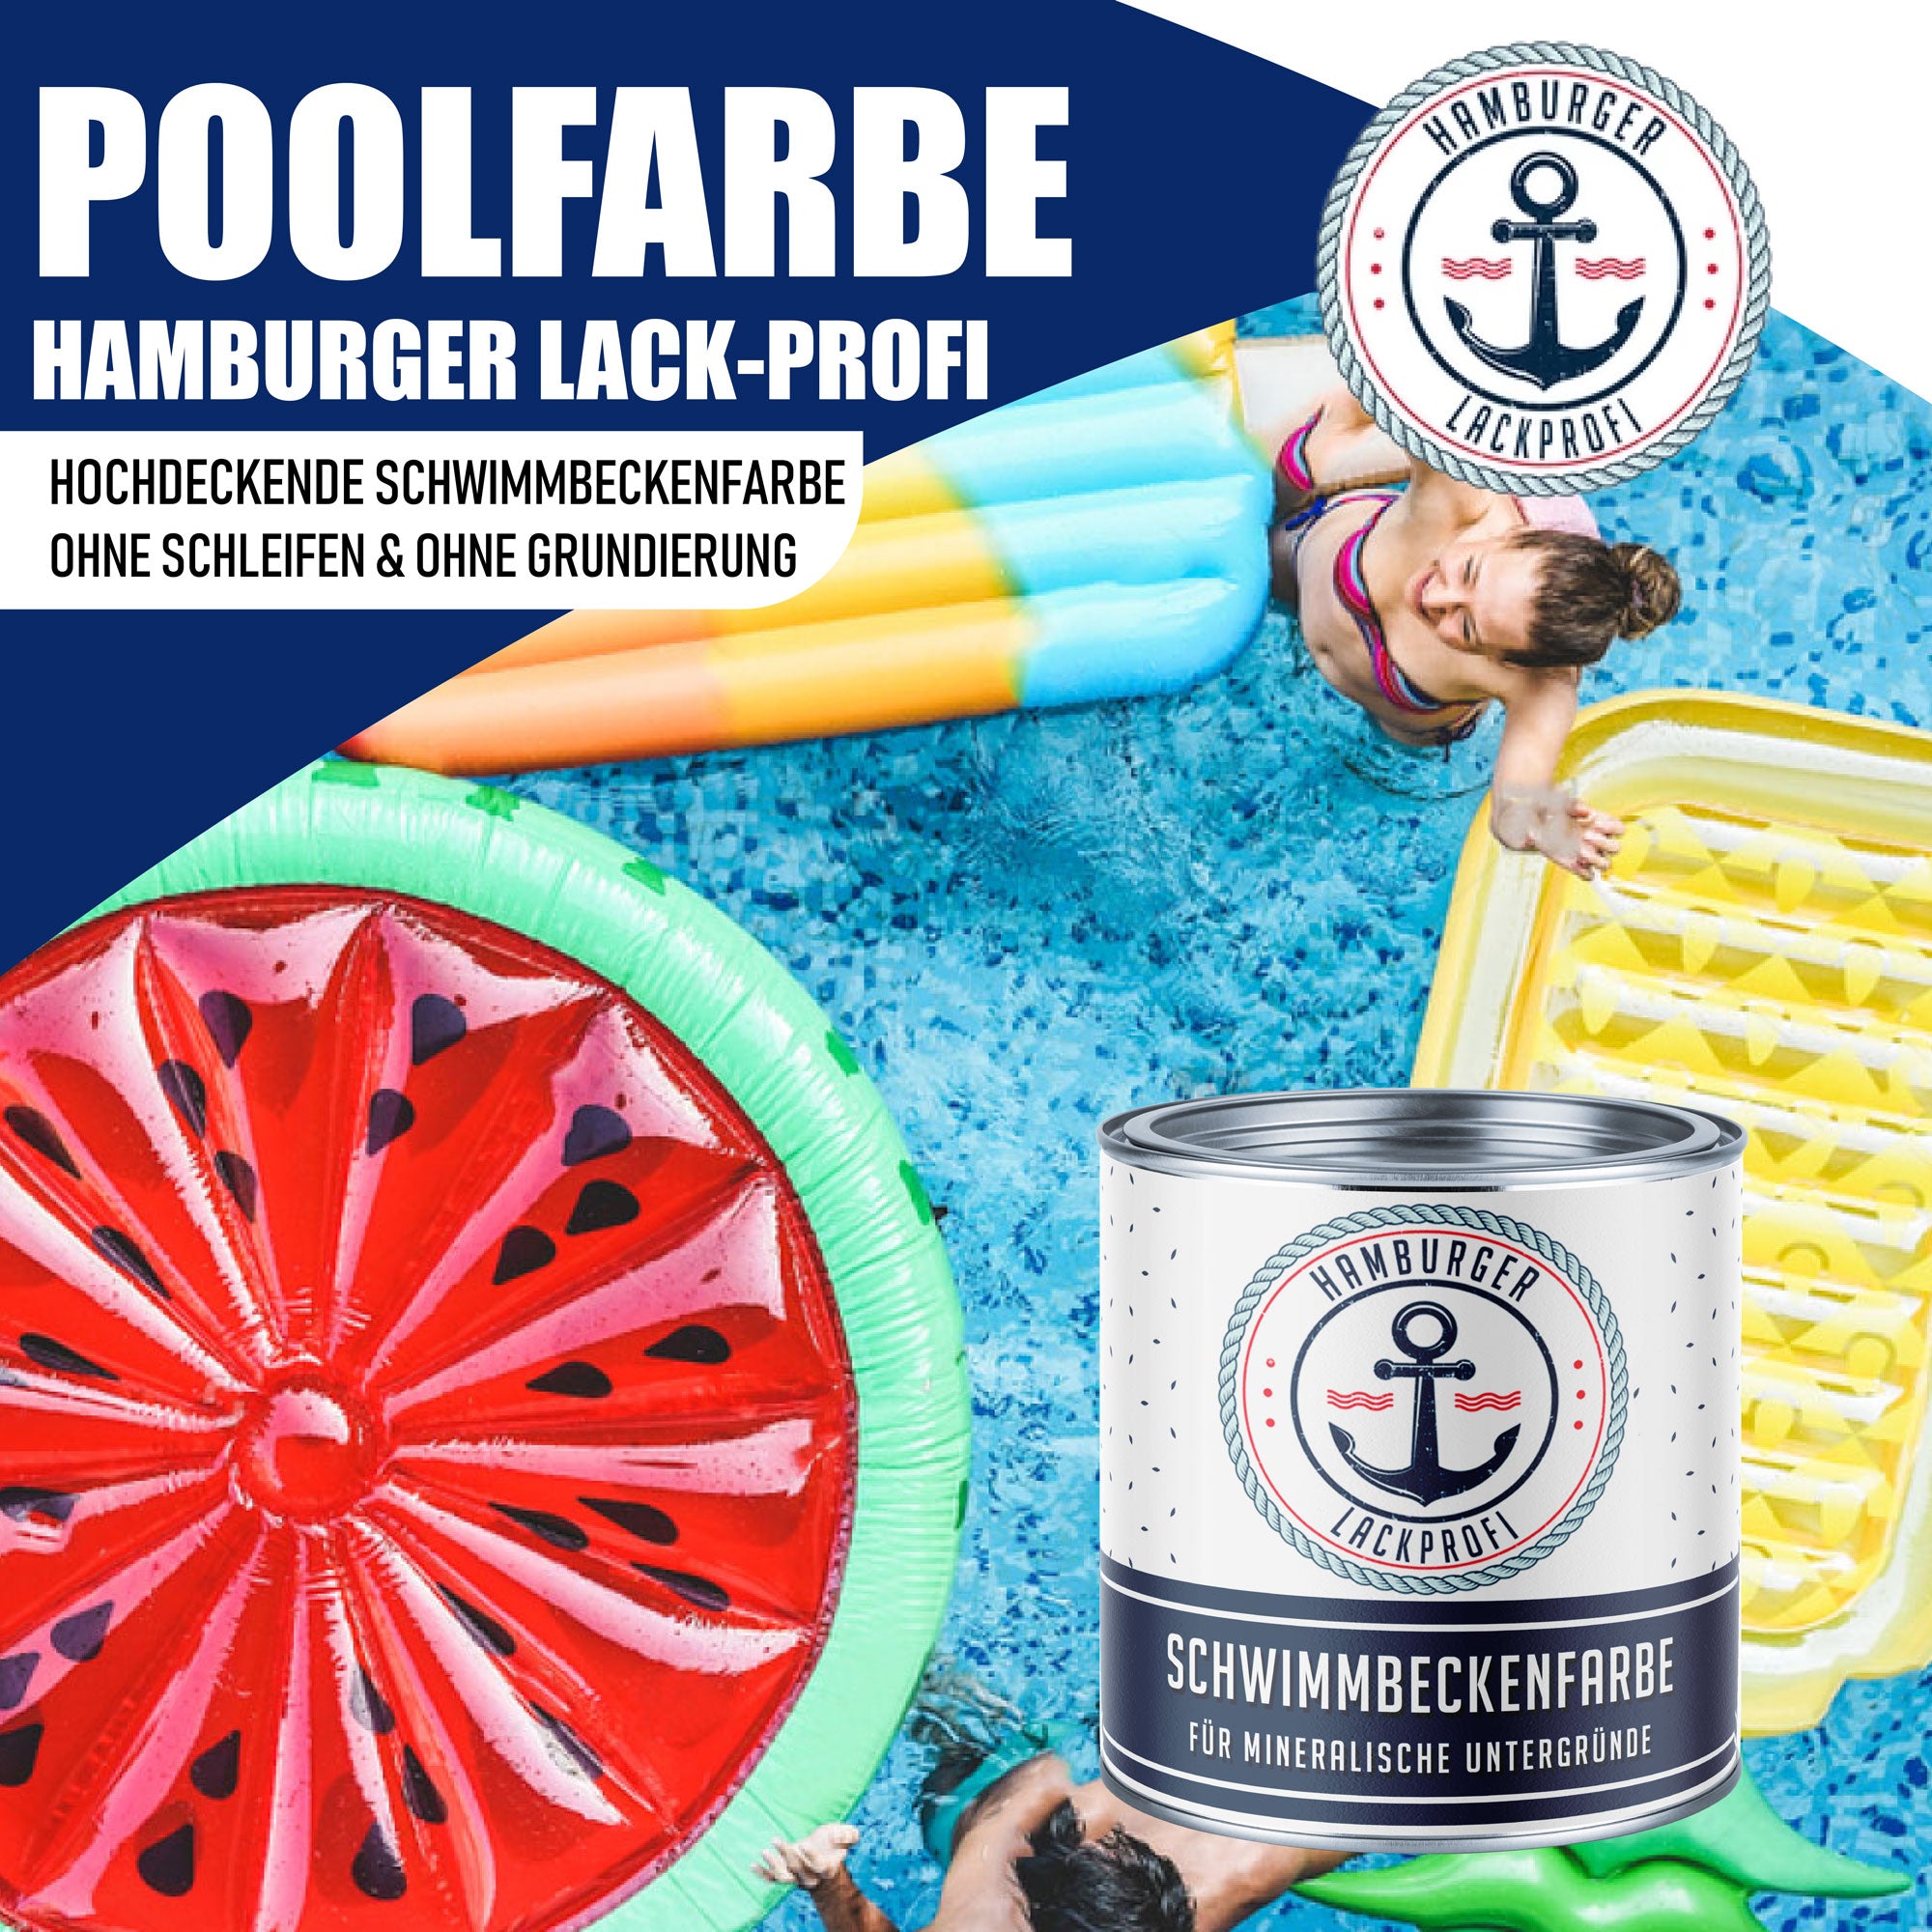 Hamburger Lack-Profi Schwimmbeckenfarbe Currygelb RAL 1027 - hochdeckende Poolfarbe